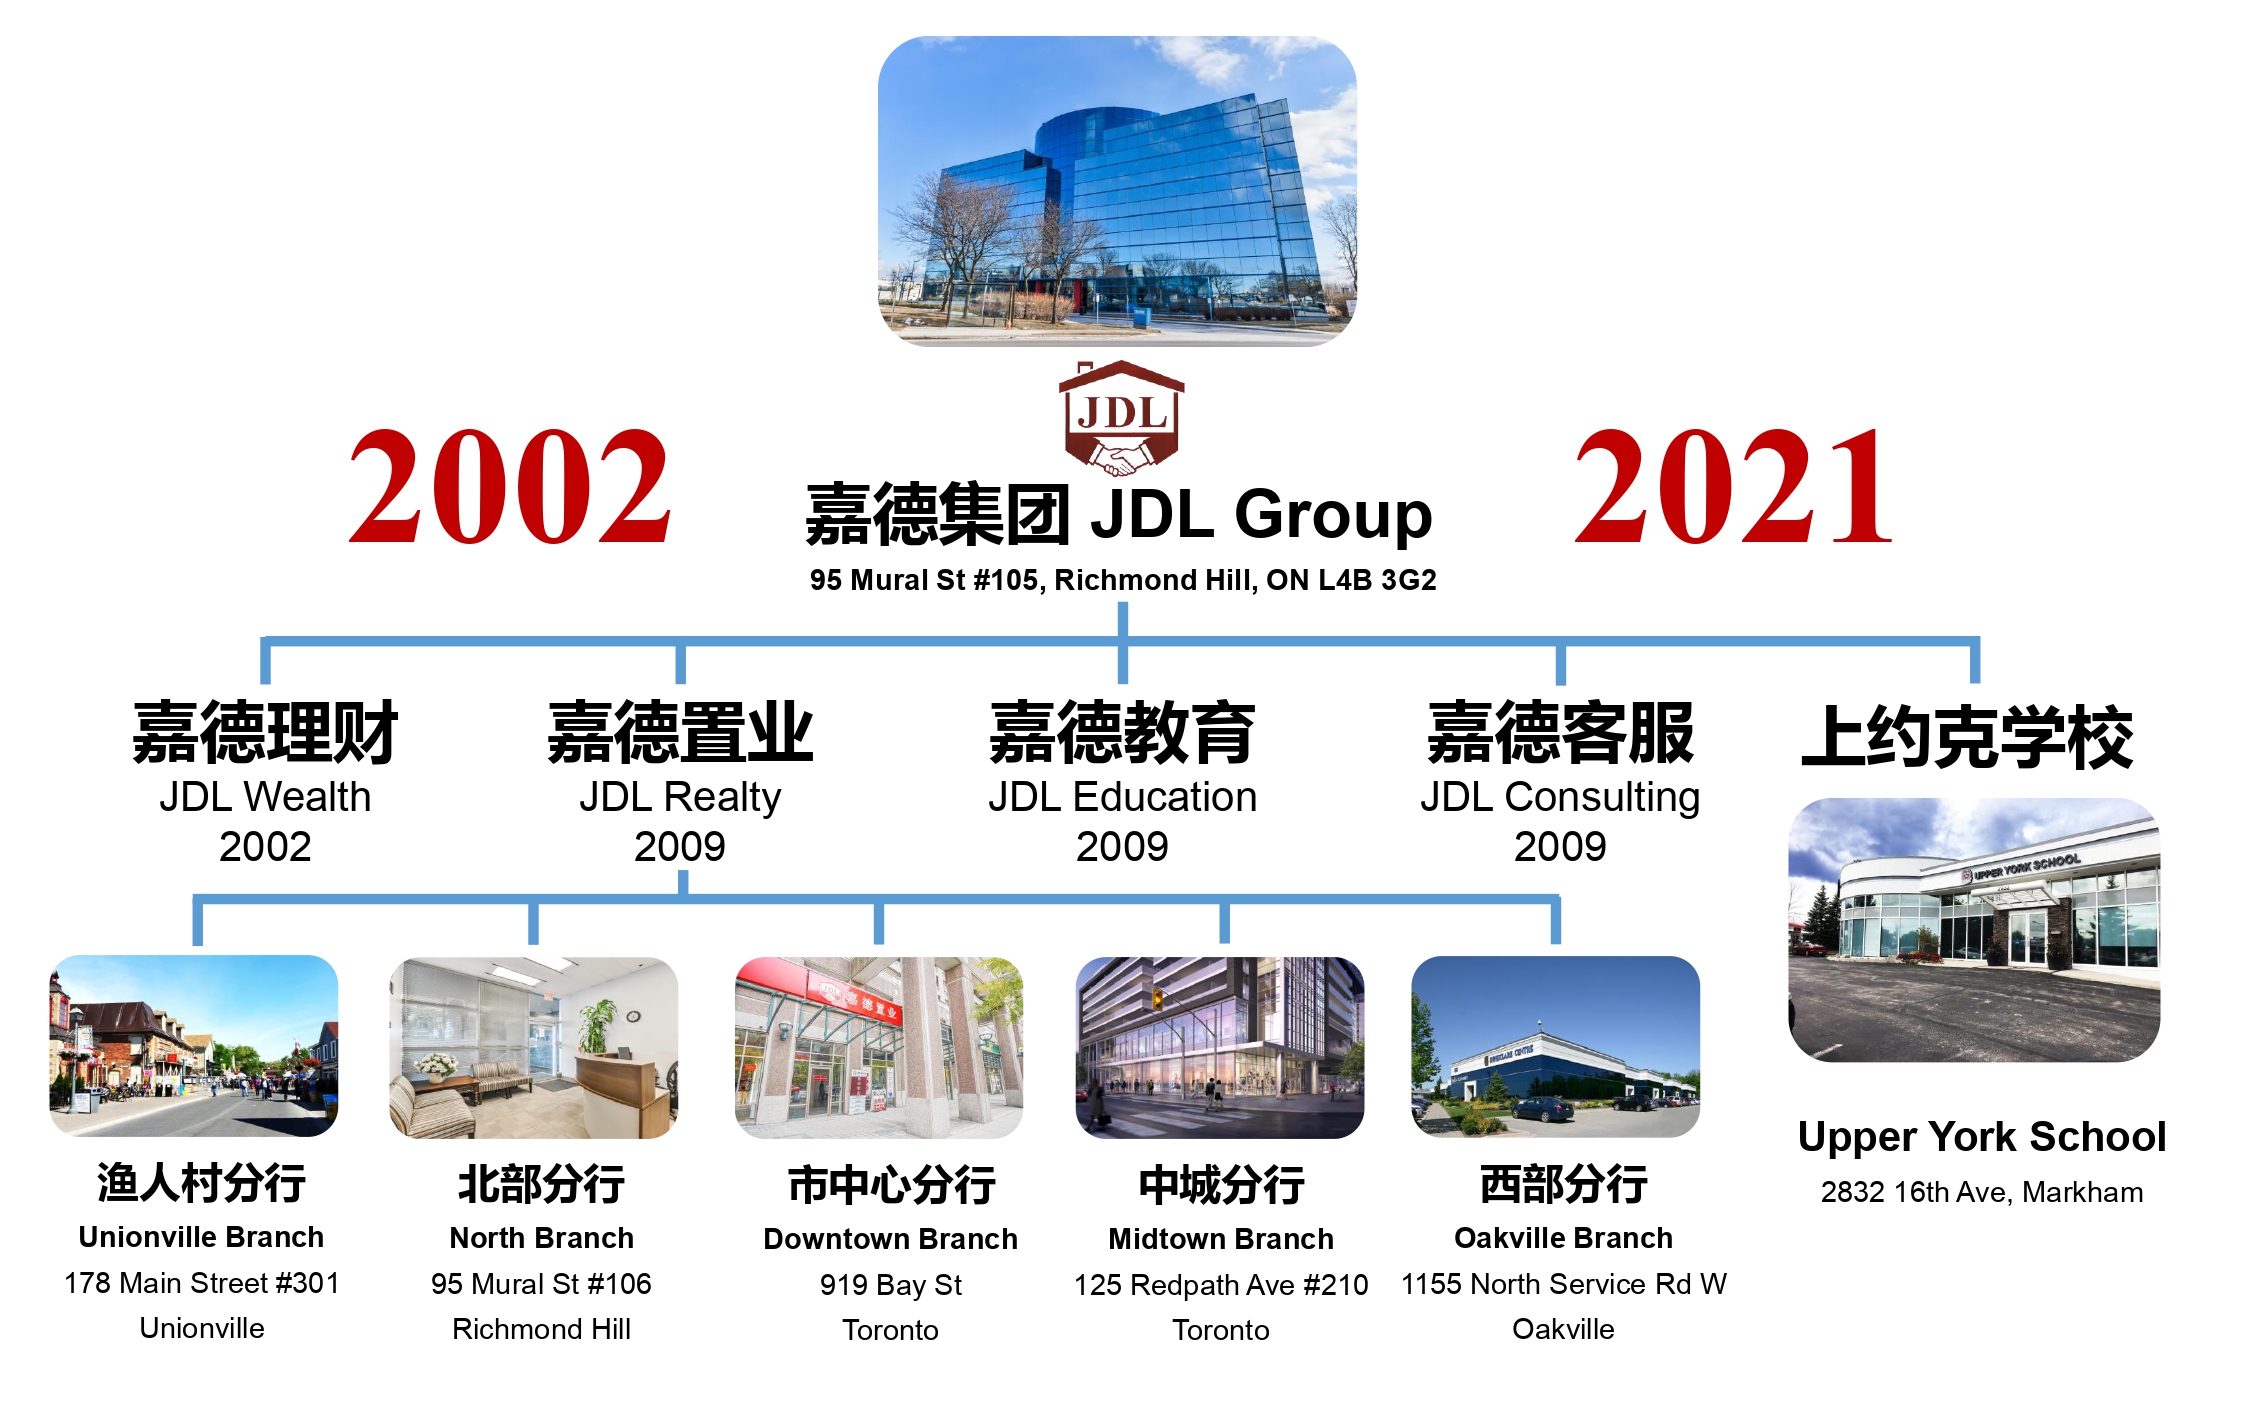 2021 JDL Group Photp